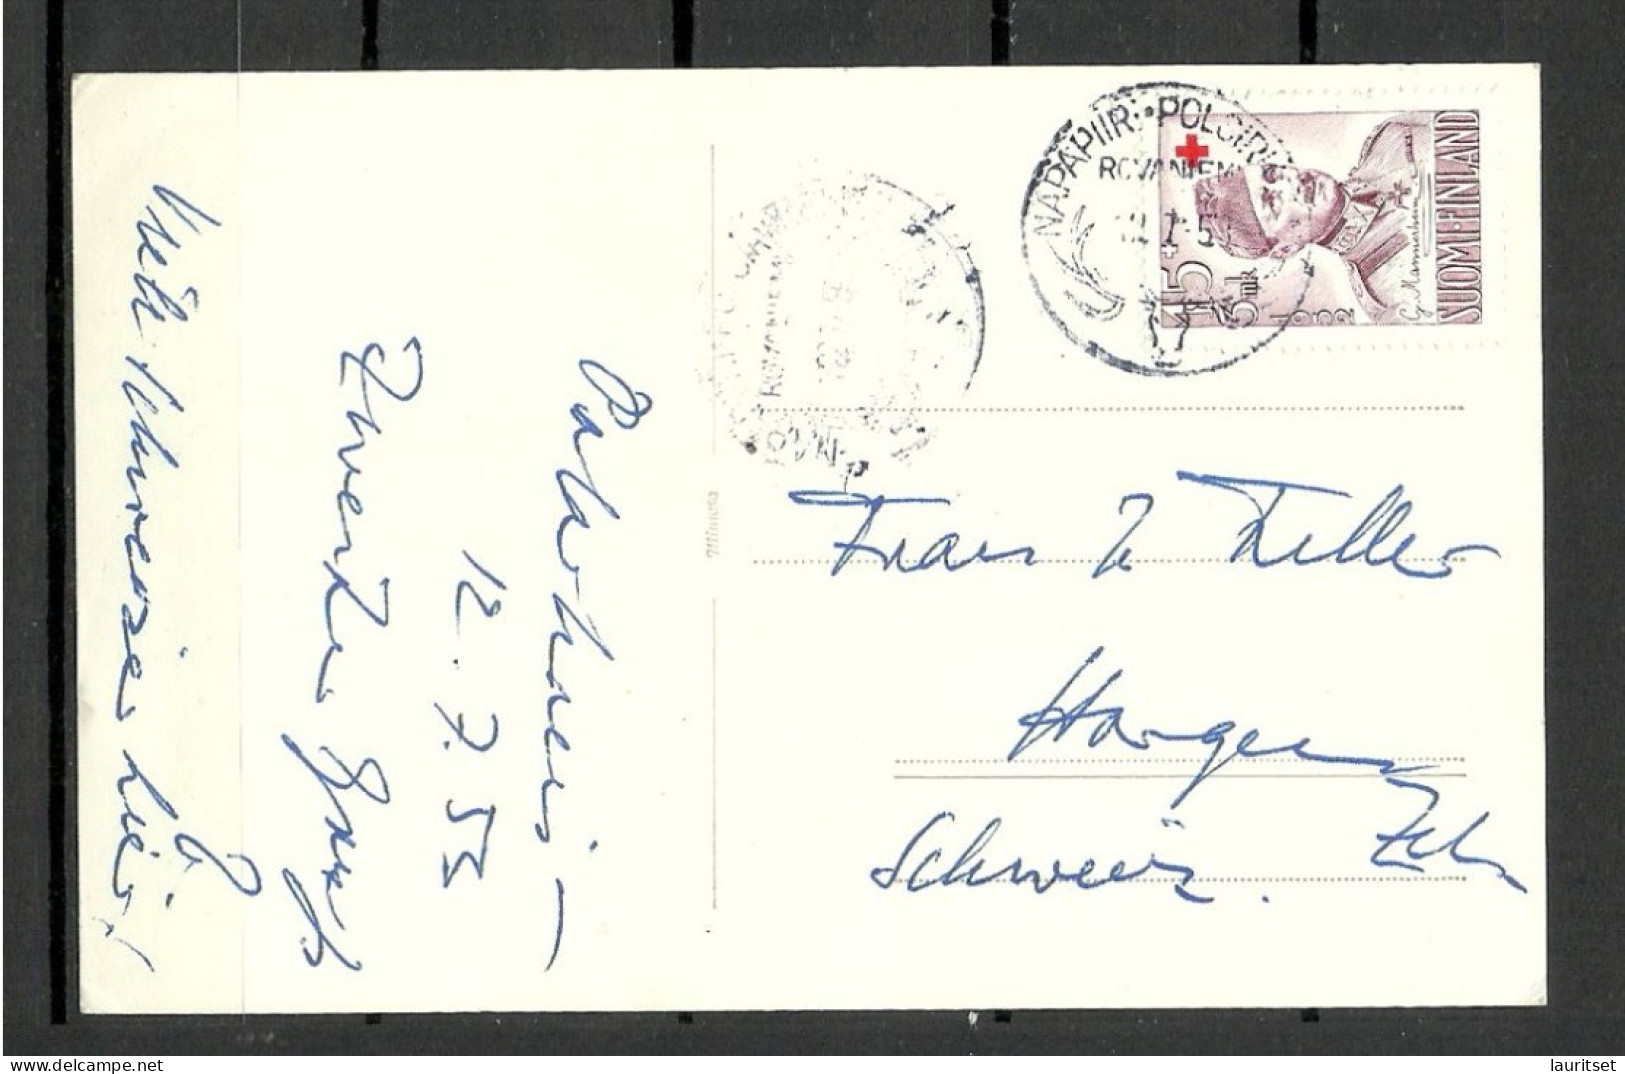 FINNLAND Finland 1953 O Napapiiri Polar Circle Rovaniemi Post Card Sent To Switzerland Michel 408 As Single - Lettres & Documents